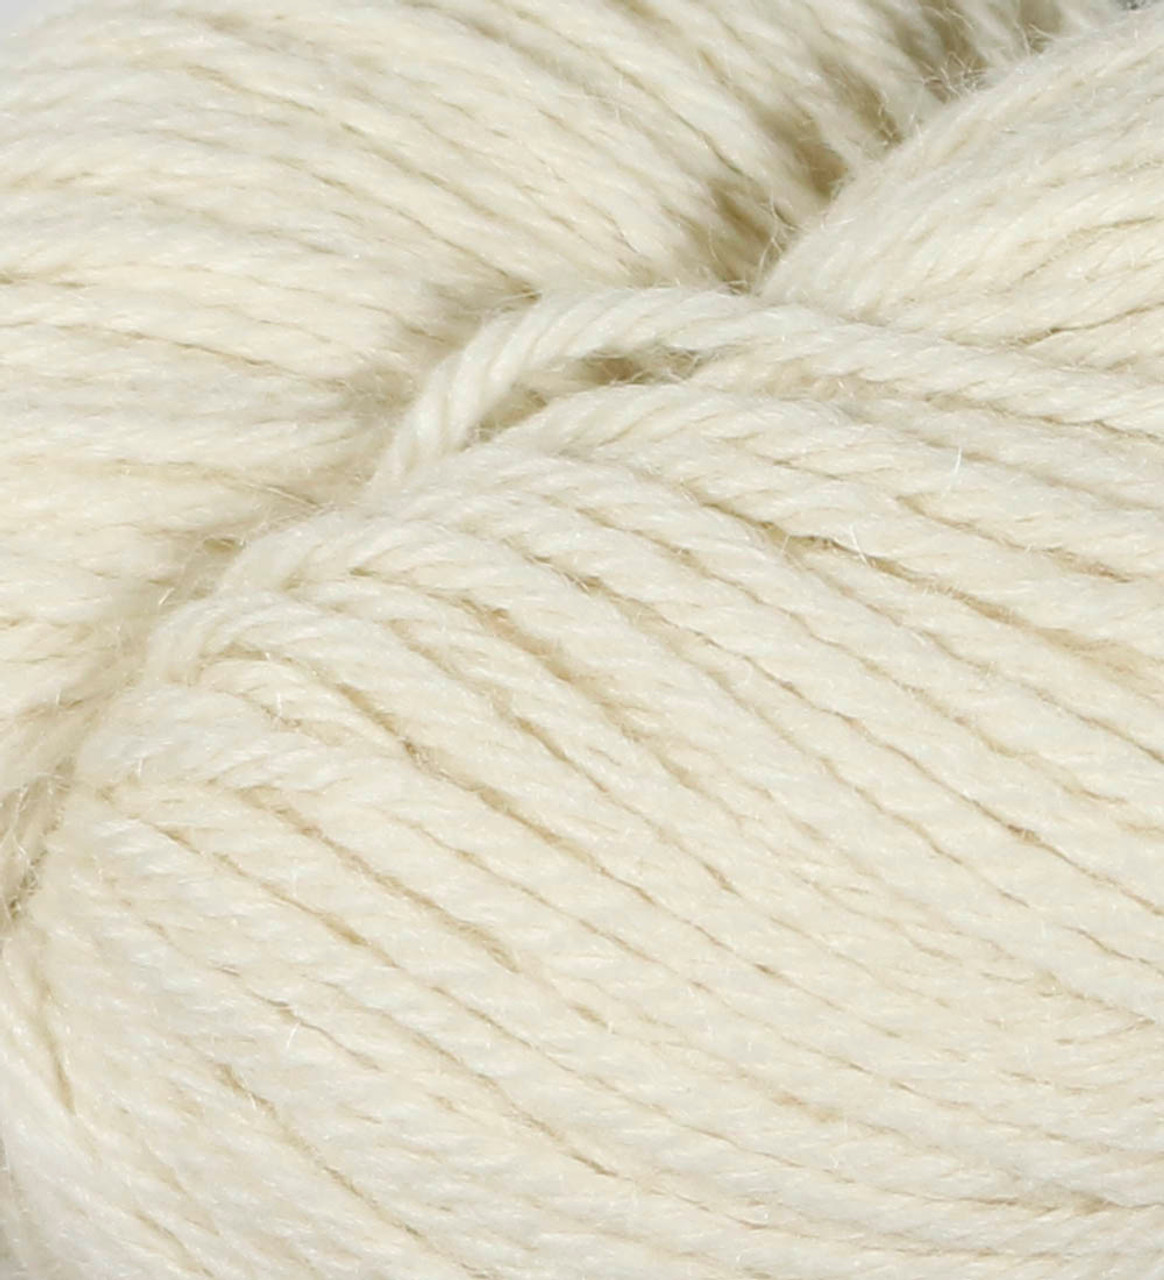 Viking Oko-Alpaca Eco Alpaca yarn – NeedfulThings